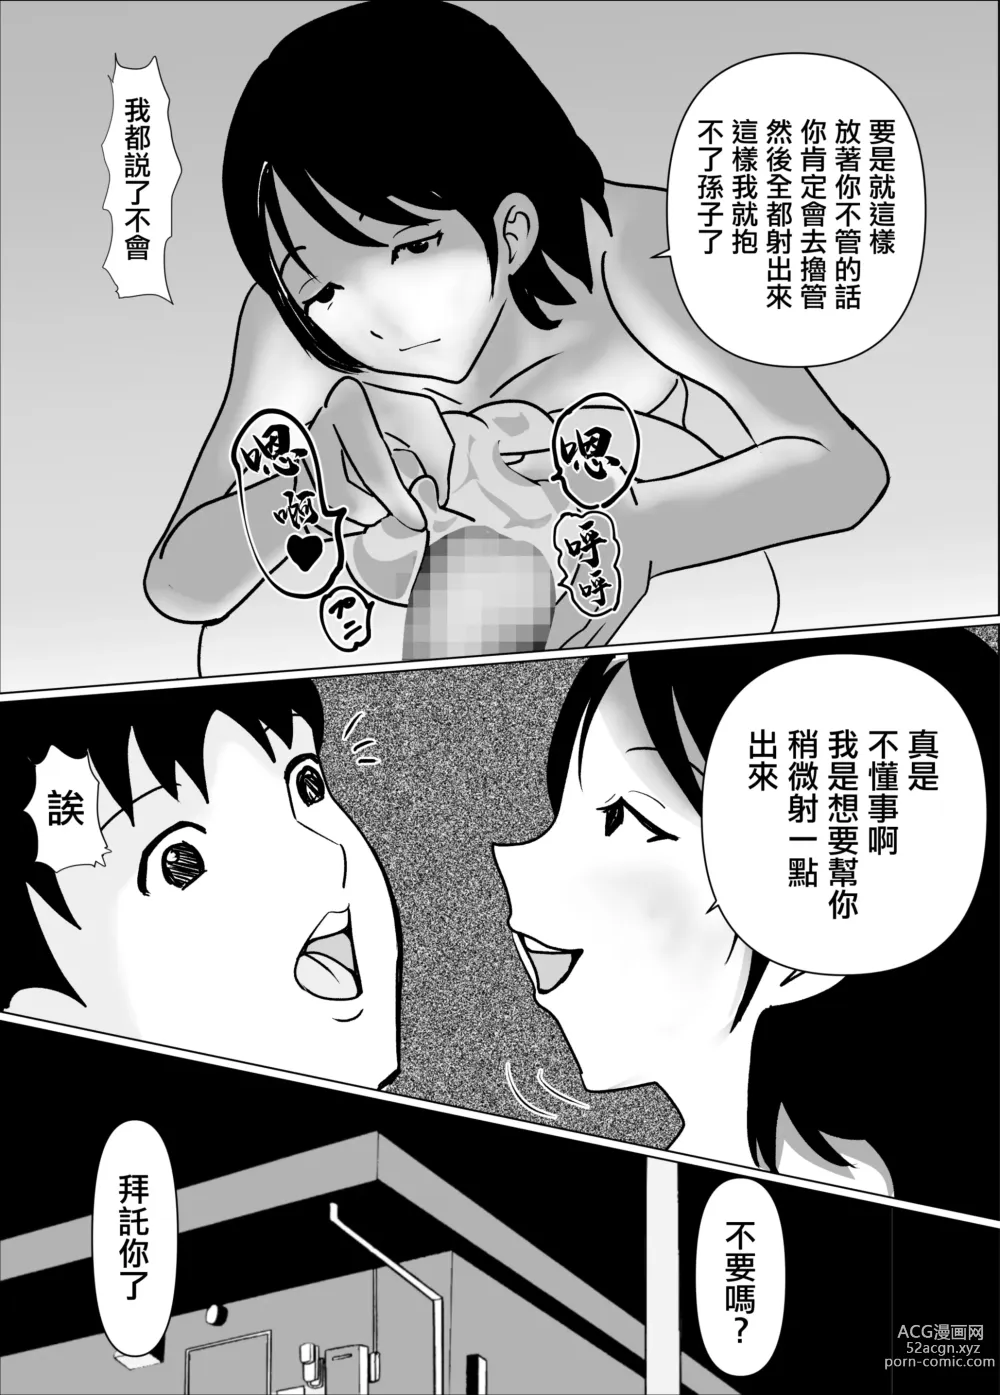 Page 14 of doujinshi 為了在妻子的排卵日授精而攢的精子被丈母娘看上了